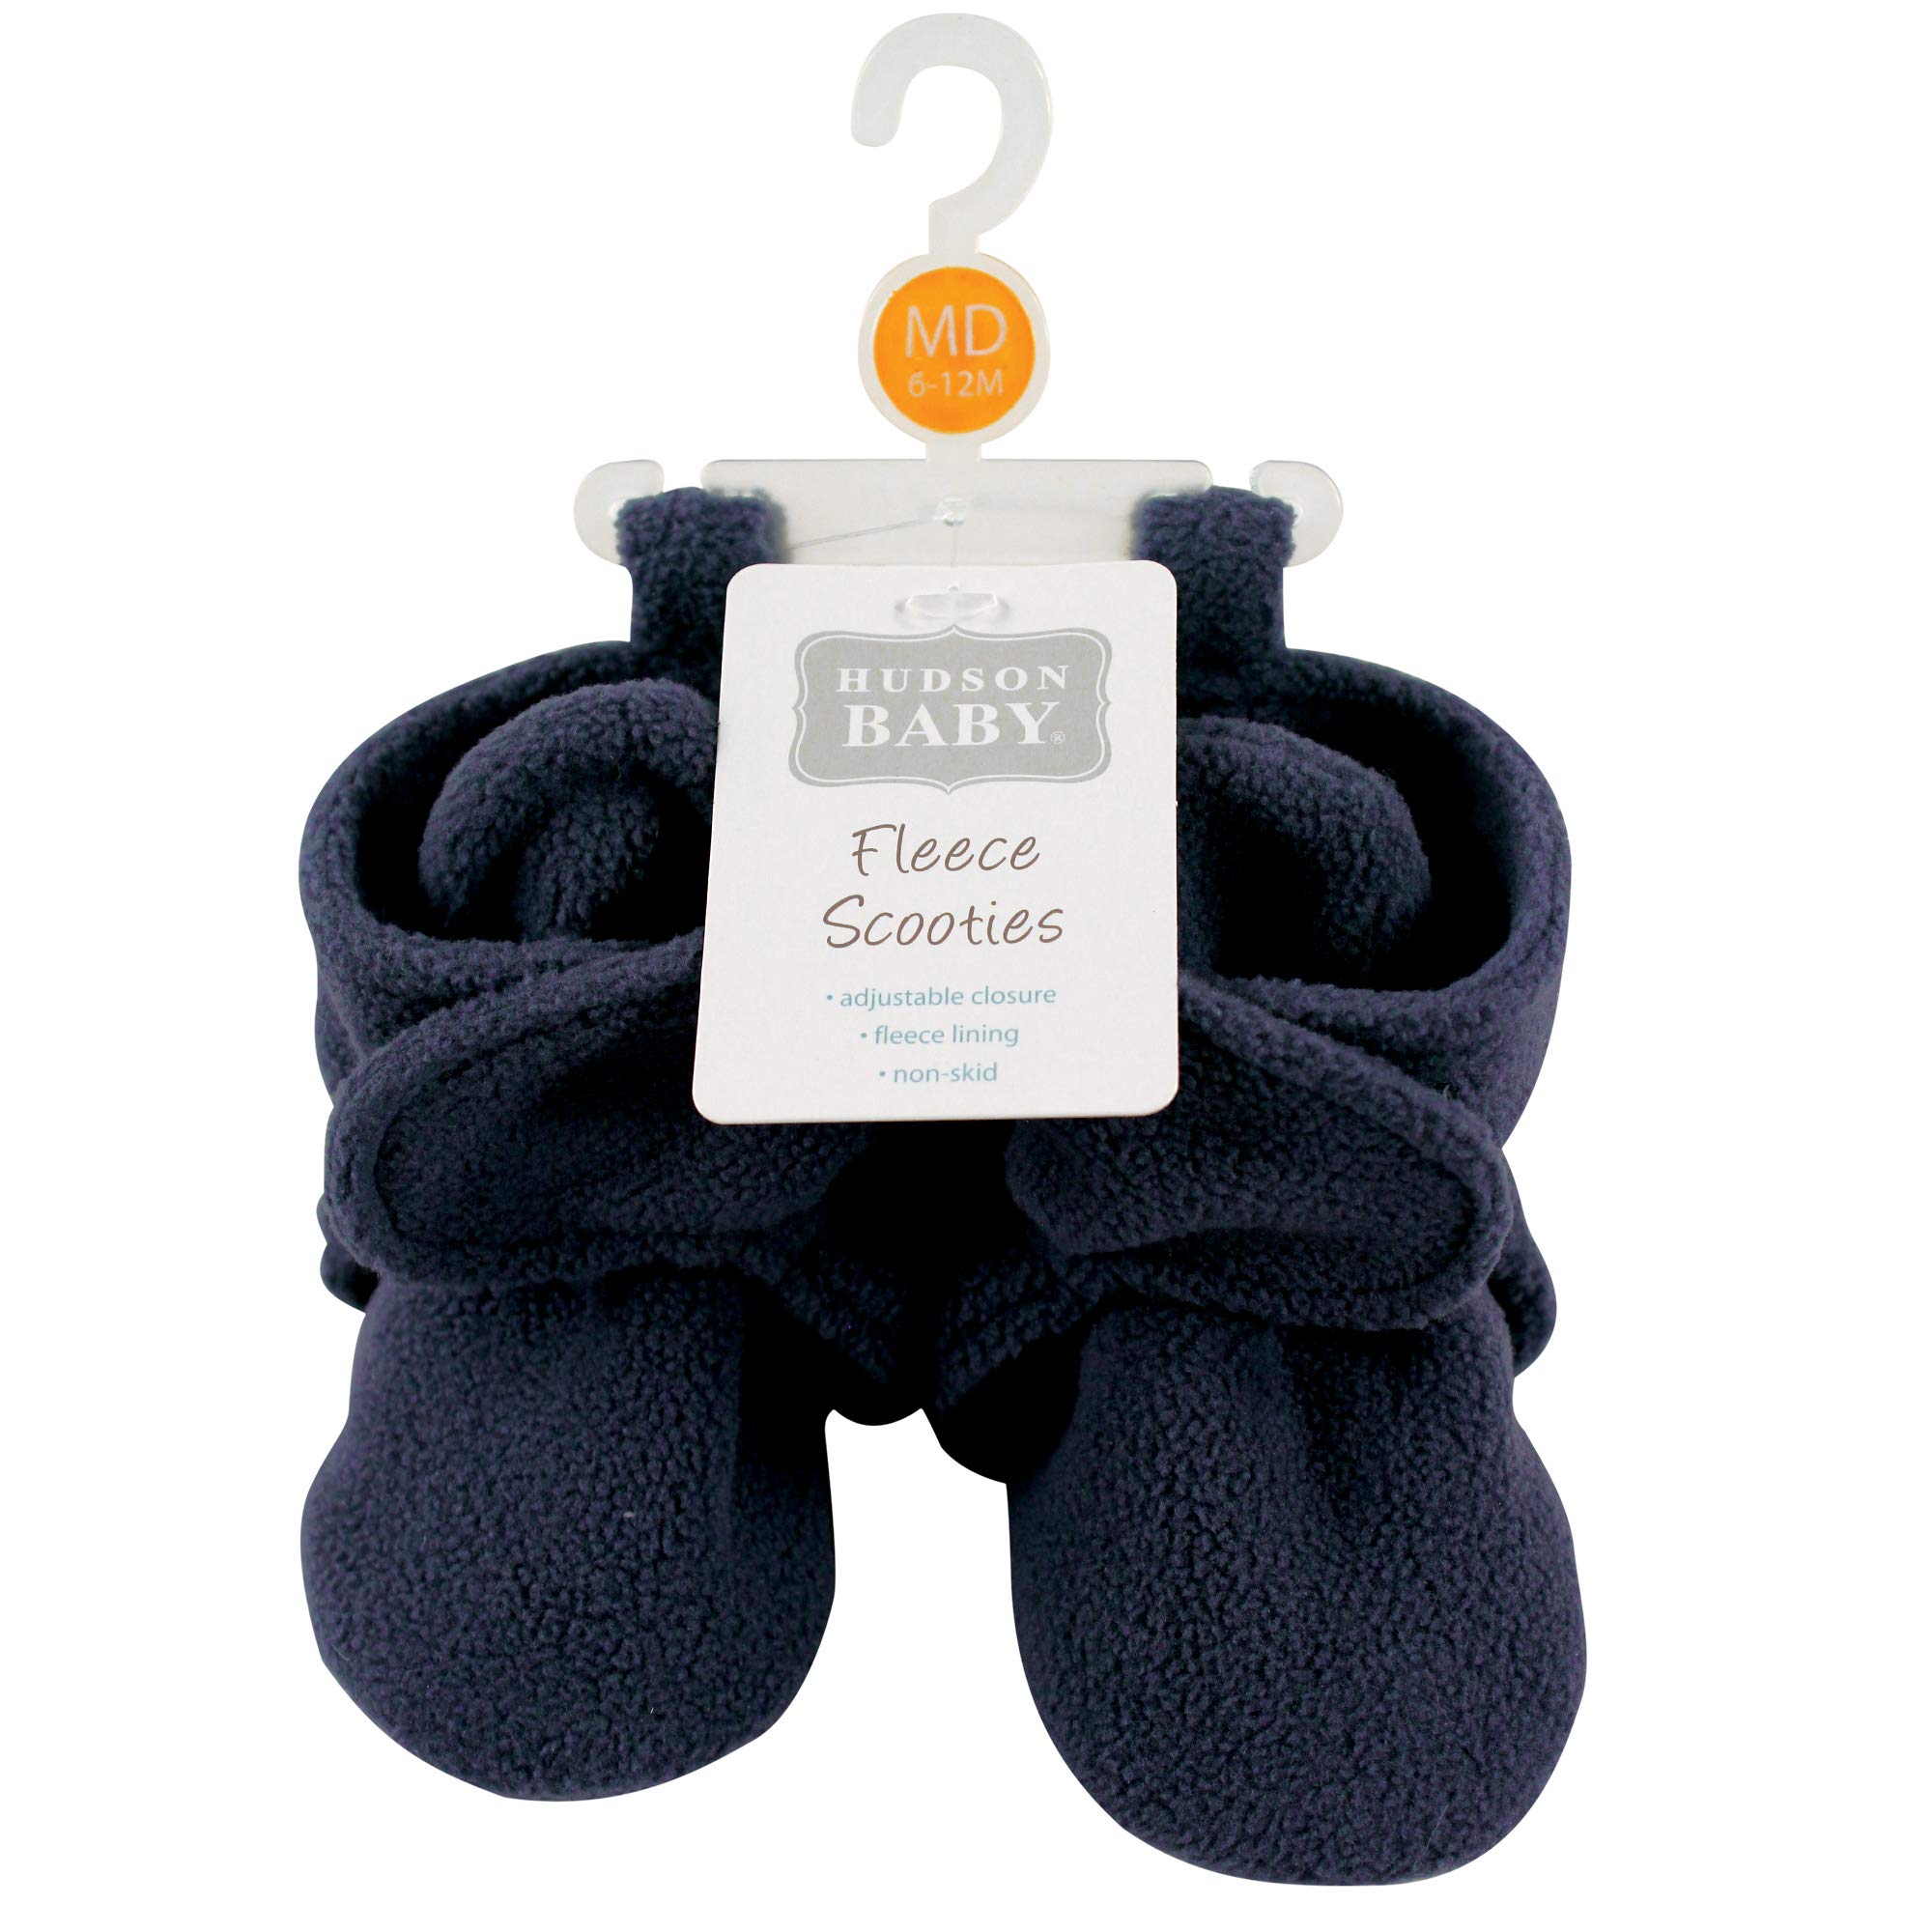 Hudson Baby unisex child Cozy Fleece Booties Slipper Sock, Navy, 18-24 Months Toddler US